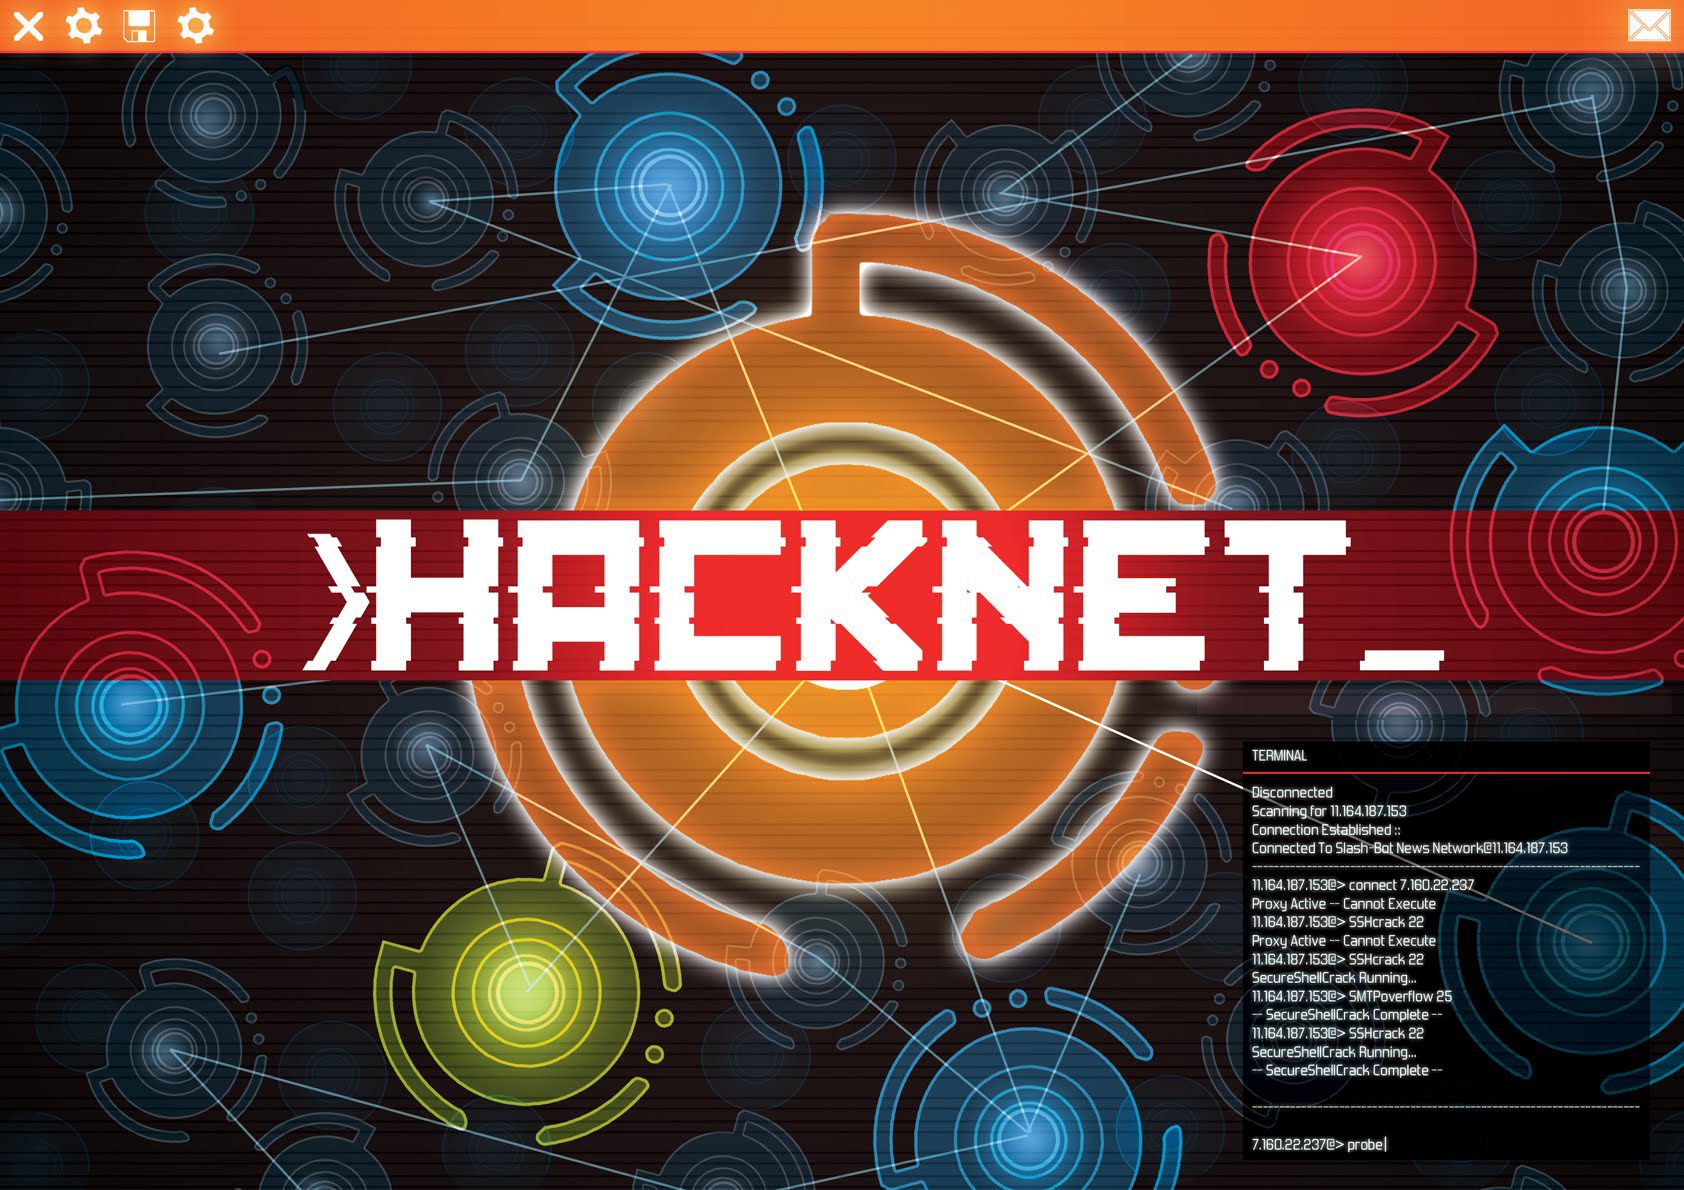 Hacknet Deluxe is Free on Humble Bundle